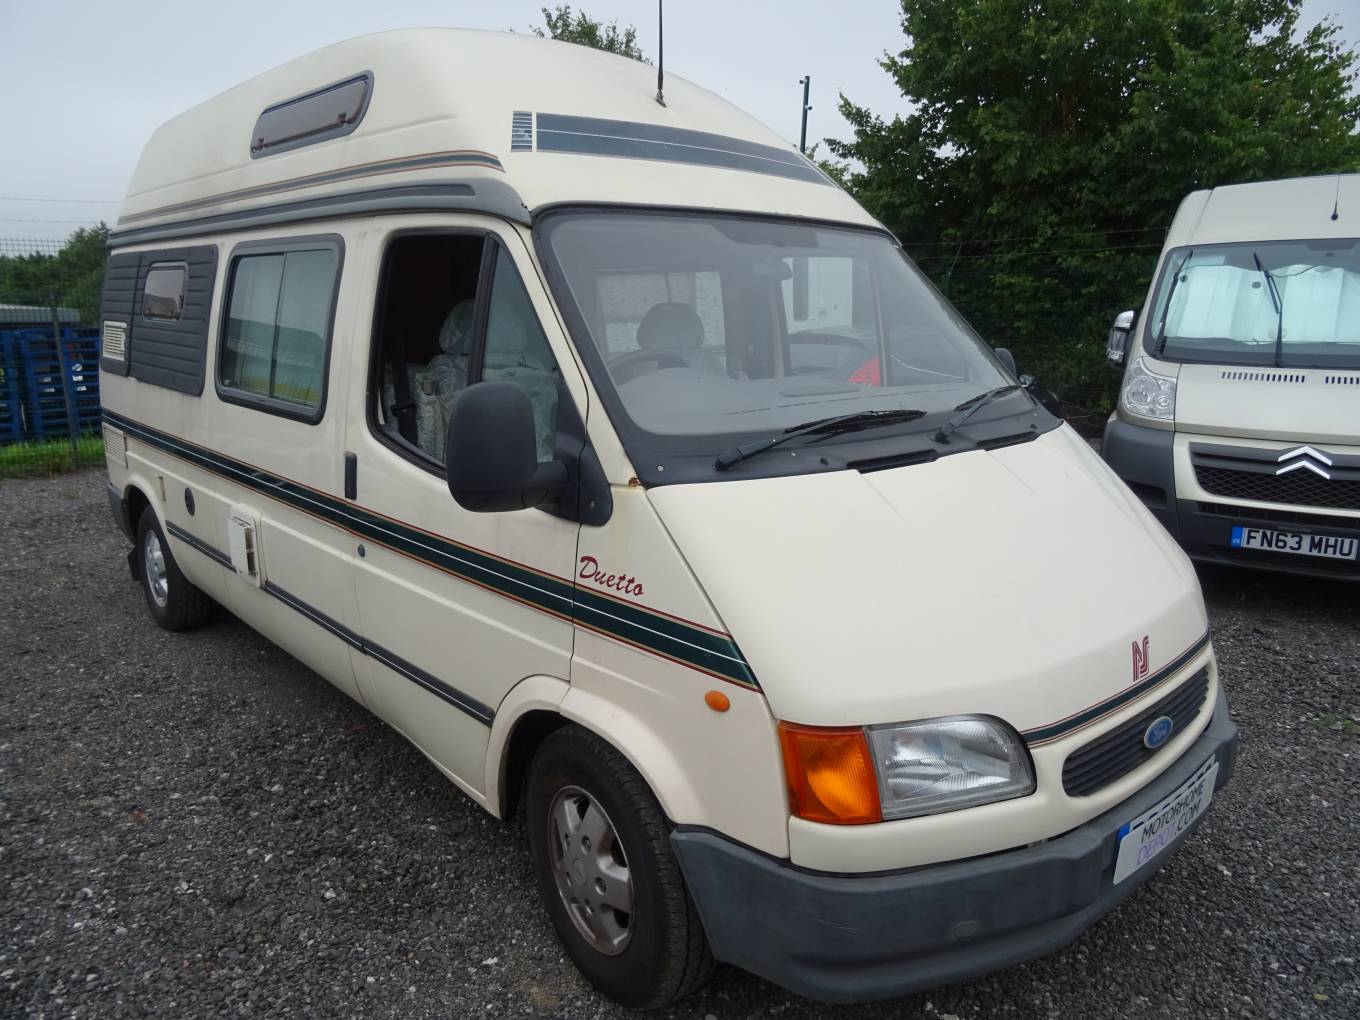 autosleeper duetto camper vans for sale